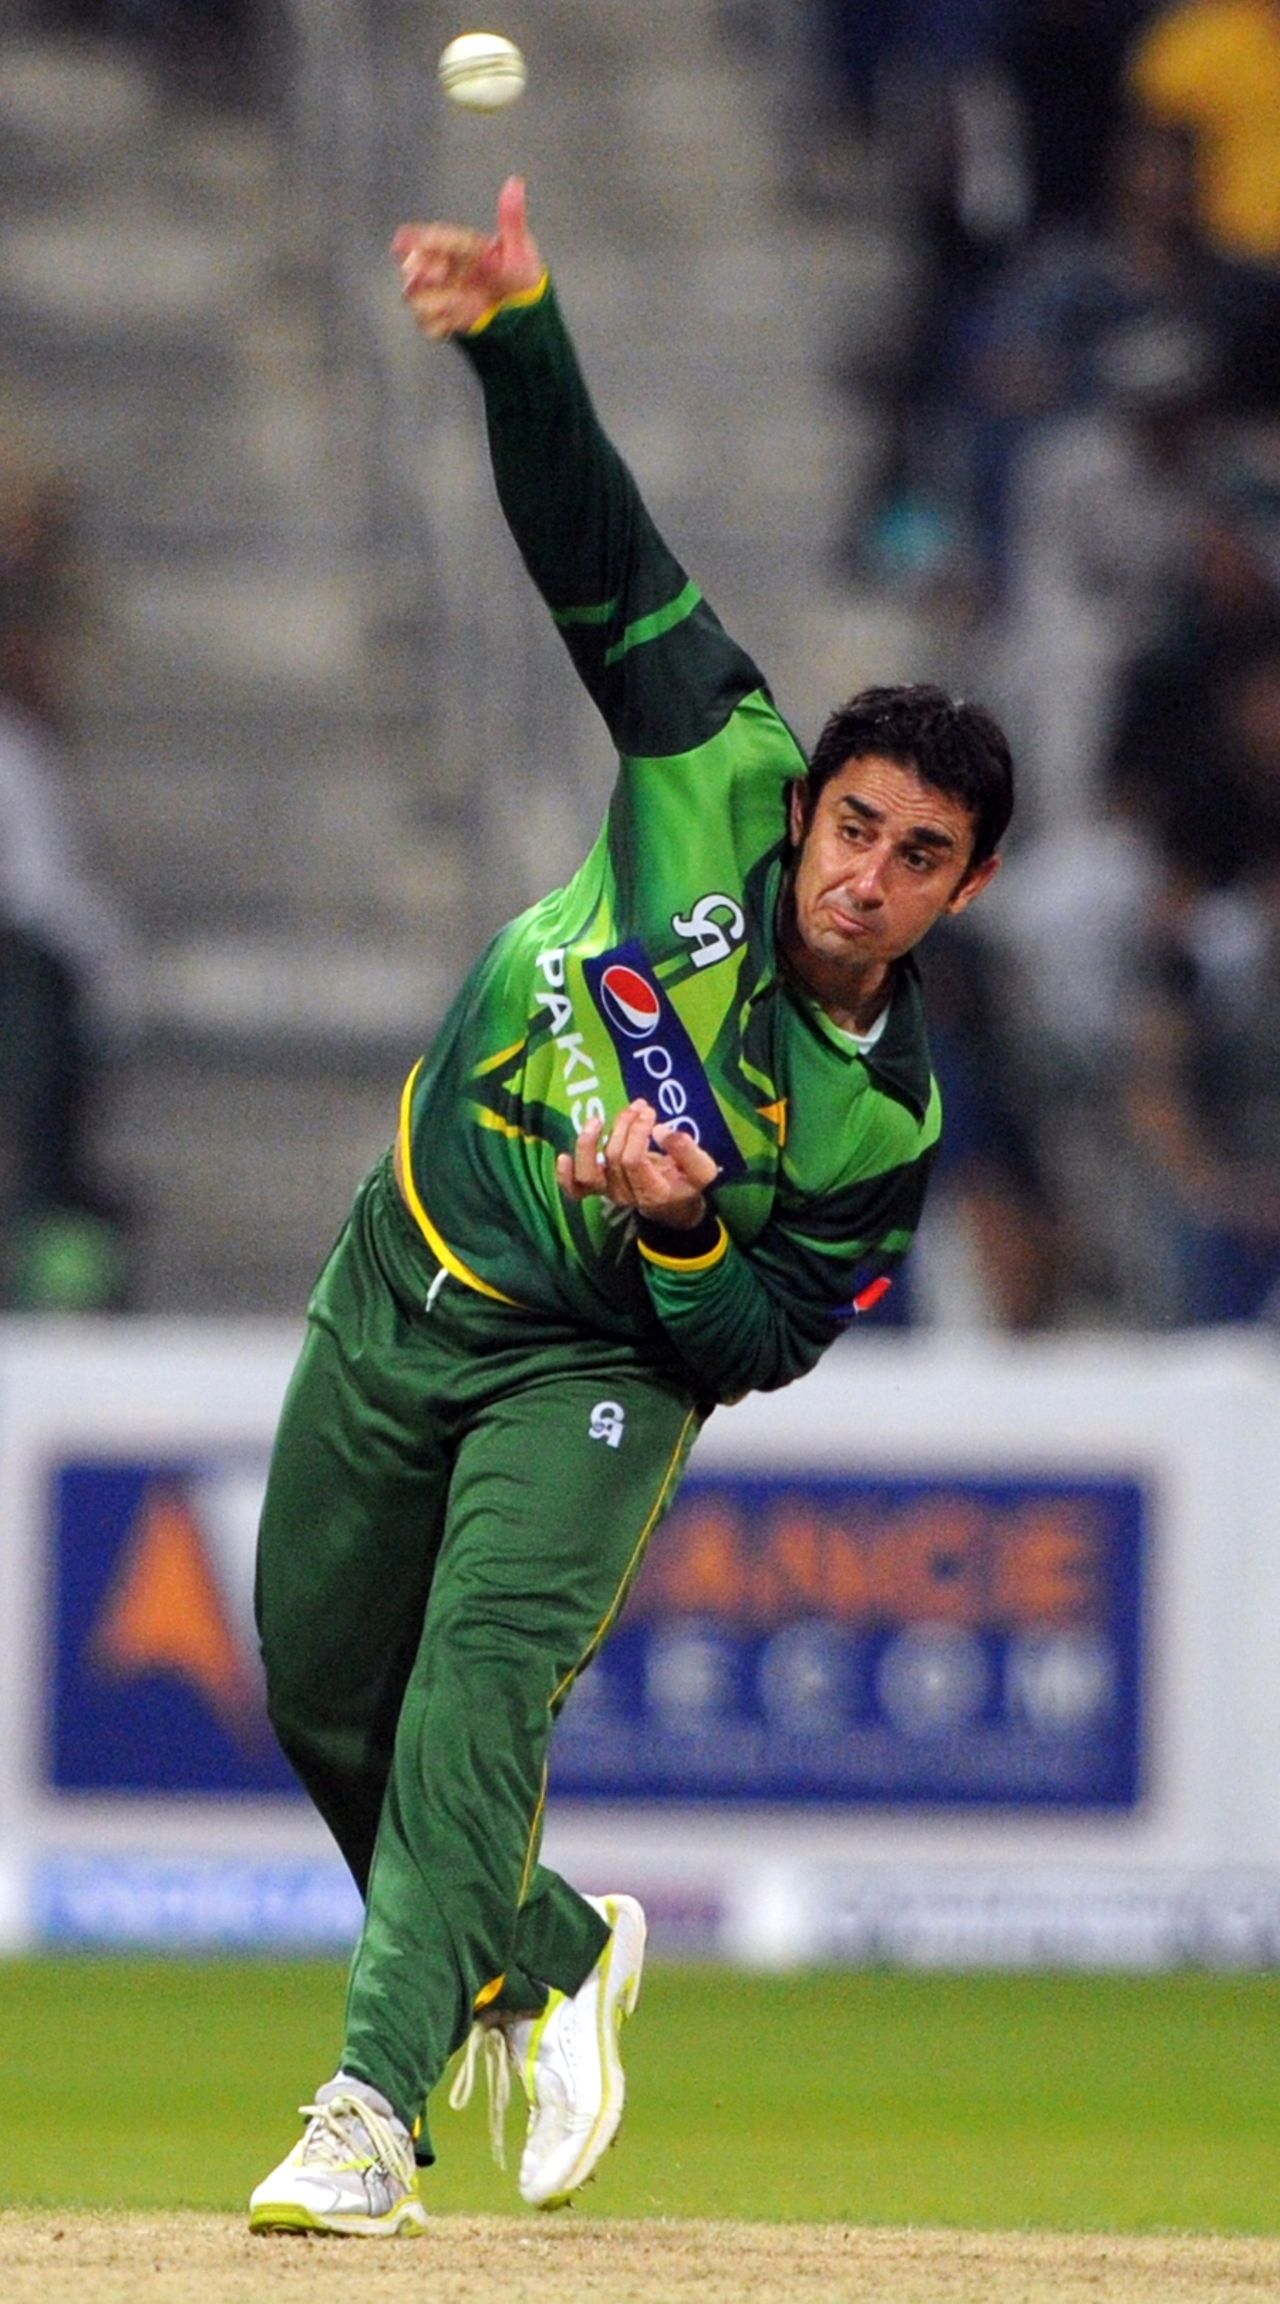 Saeed Ajmal sends down a delivery, Pakistan v Australia, 2nd ODI, Abu Dhabi, August 31, 2012